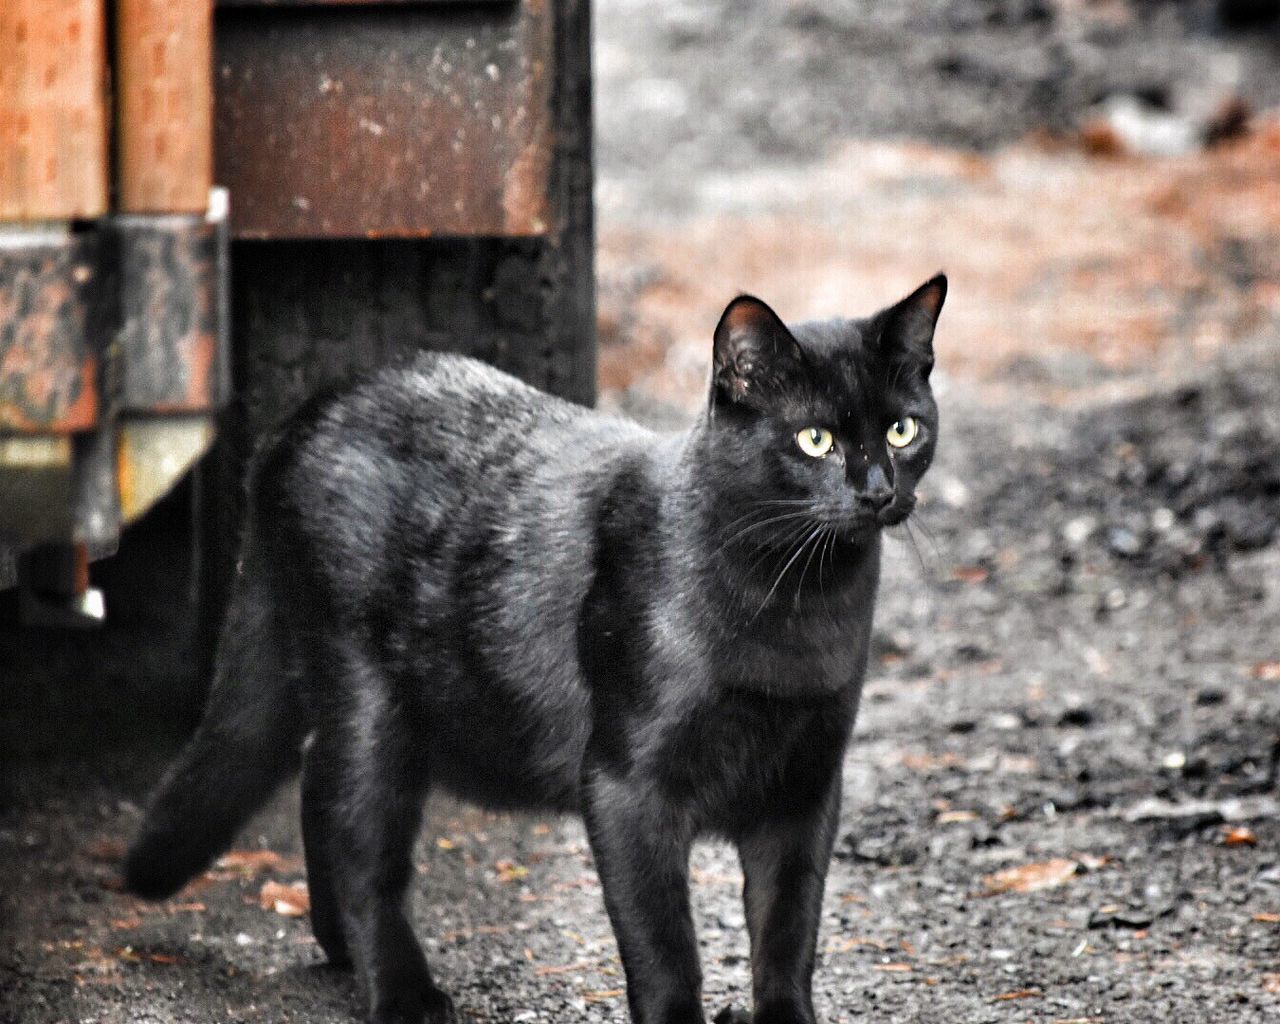 CLOSE-UP PORTRAIT OF BLACK CAT OUTDOORS